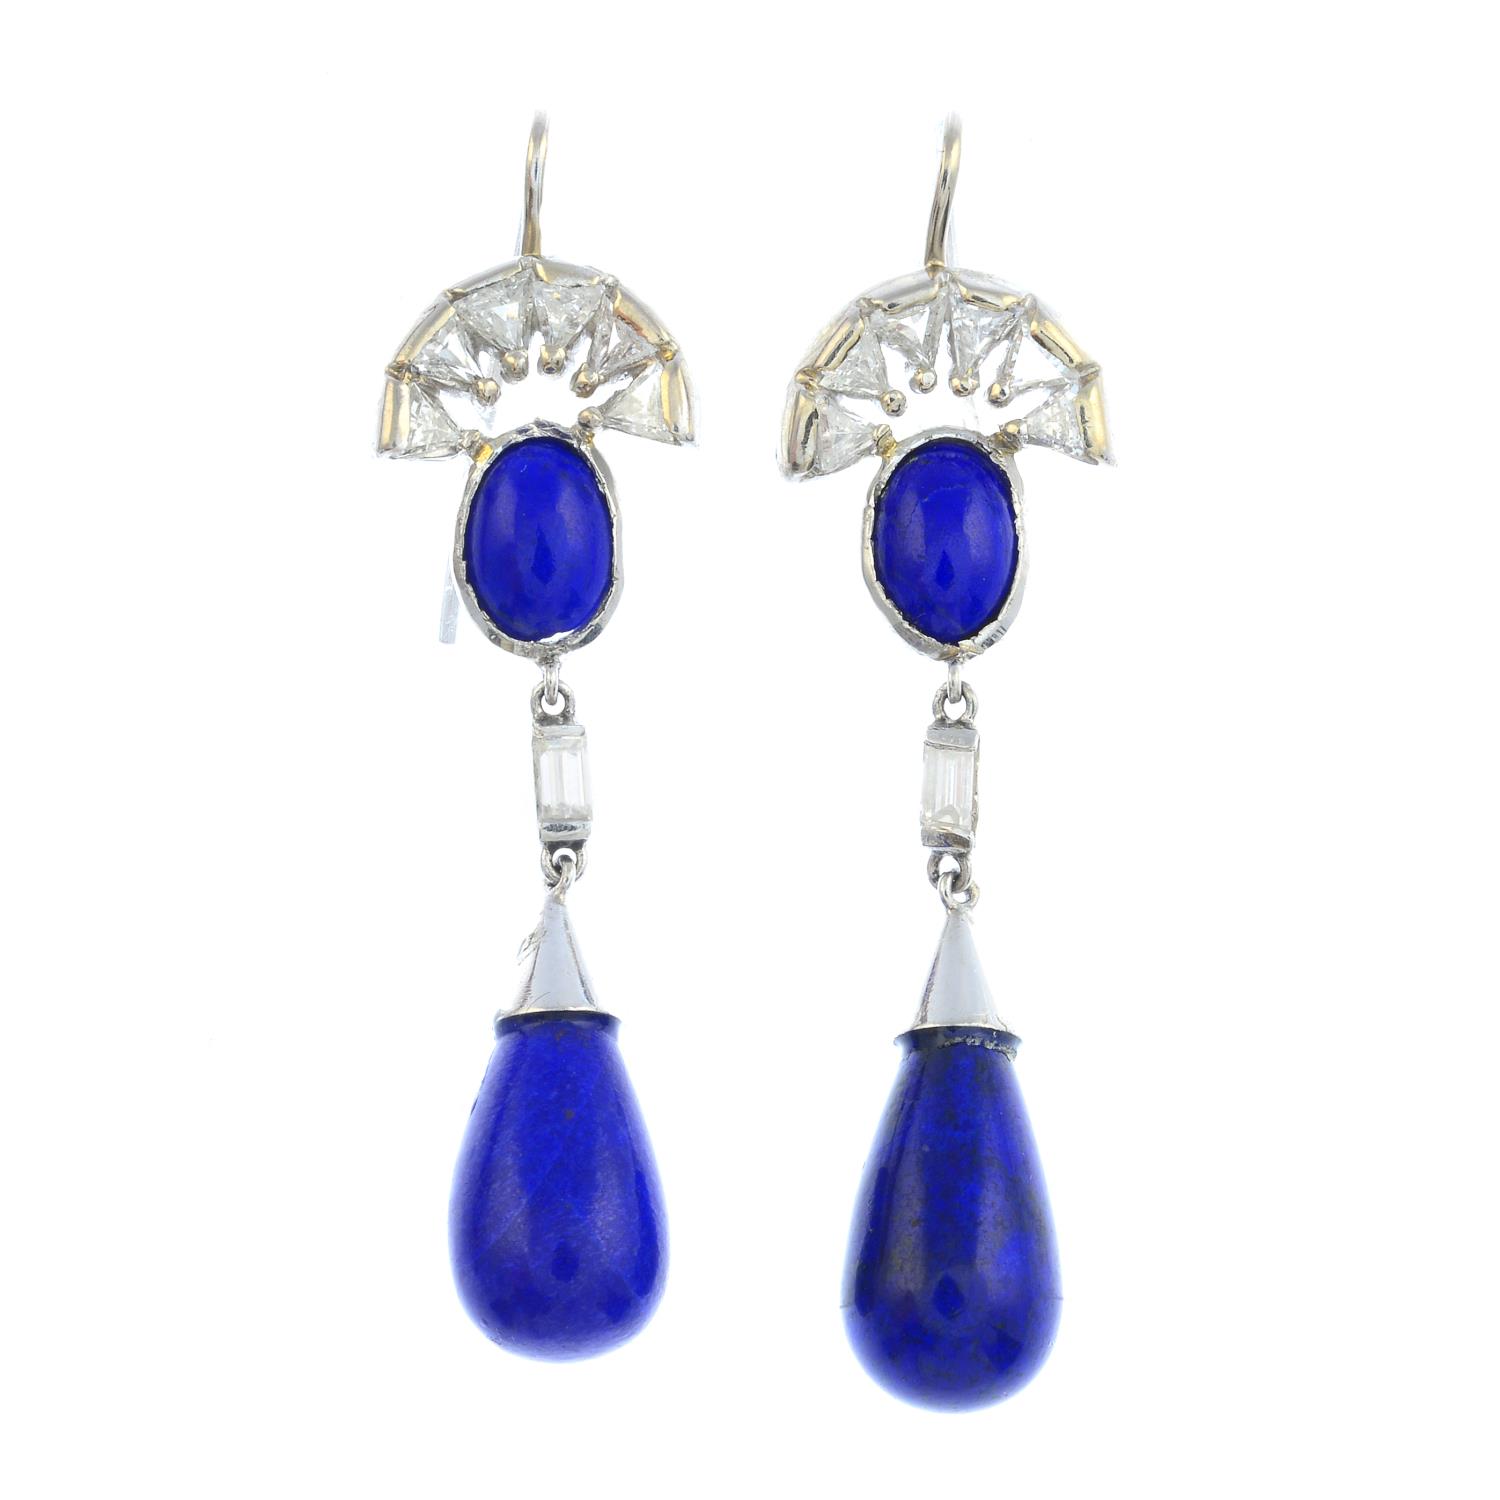 A pair of lapis lazuli and diamond earrings.